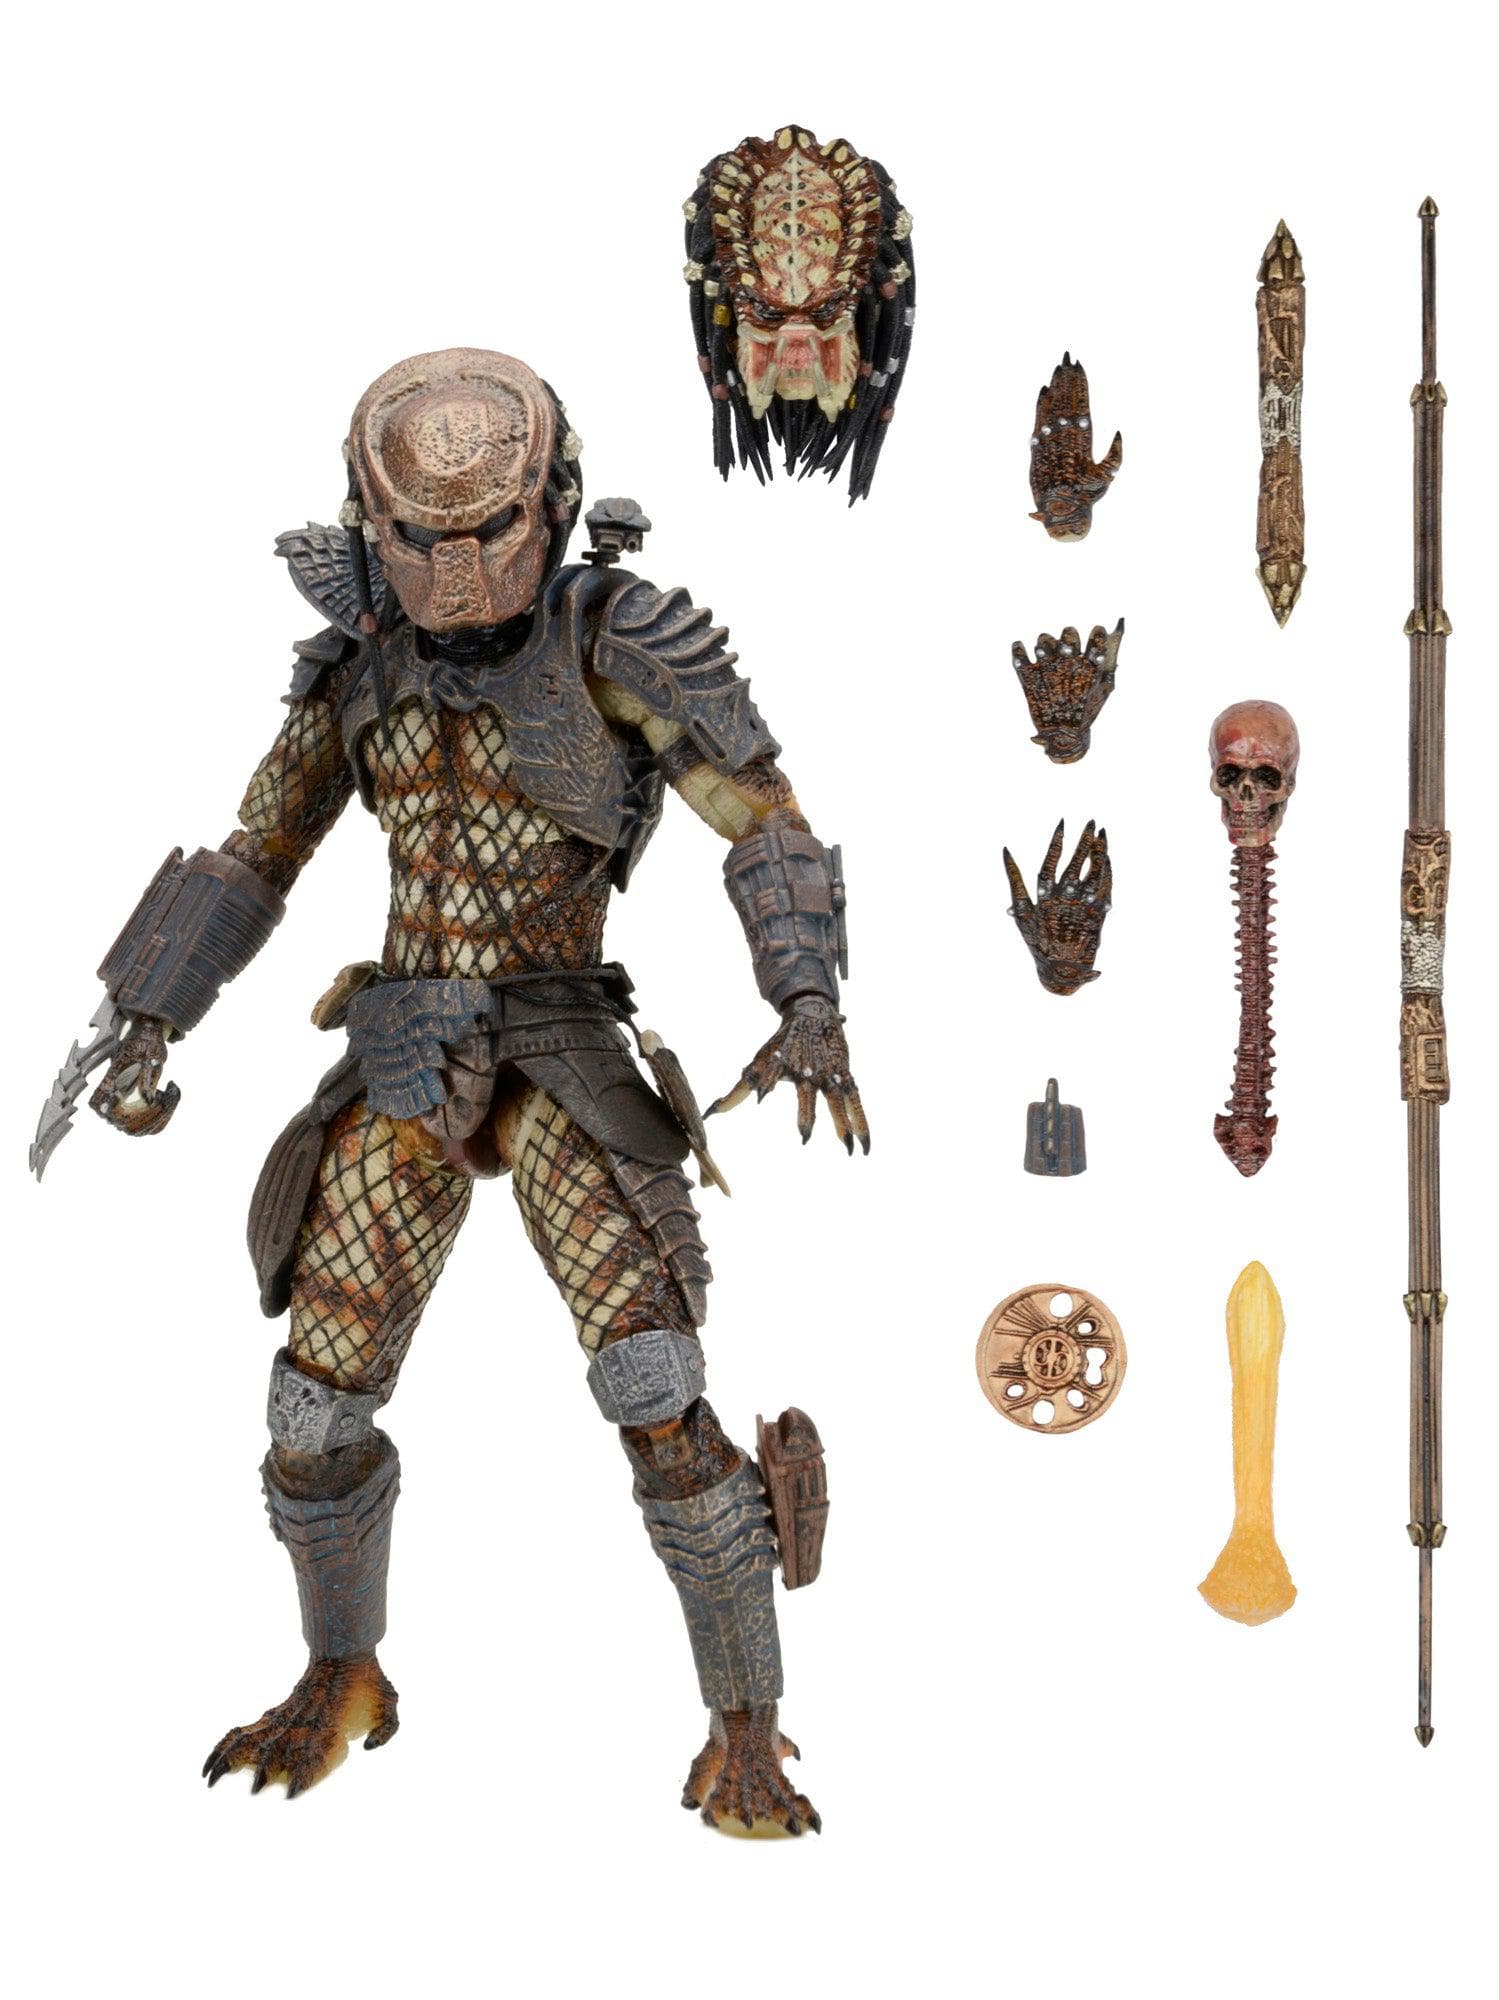 NECA - Predator 2 - 7" Action Figure - Ultimate City Hunter - costumes.com